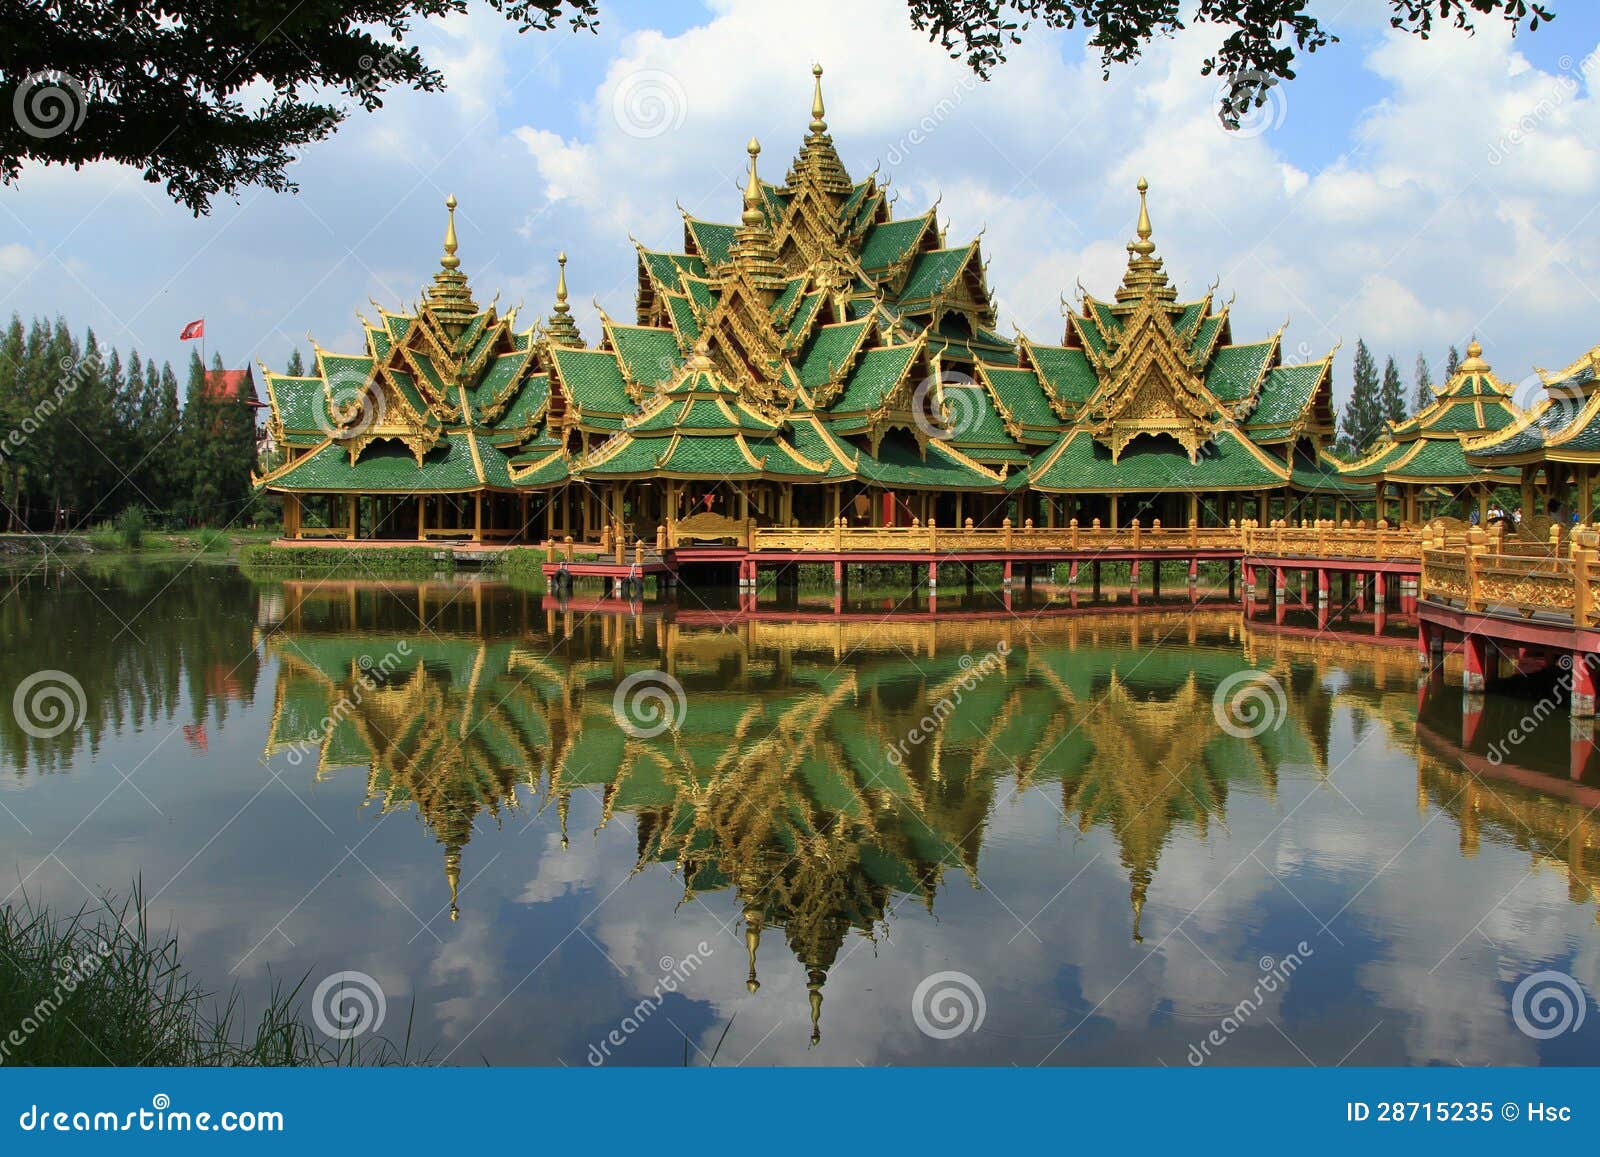 thailand temples